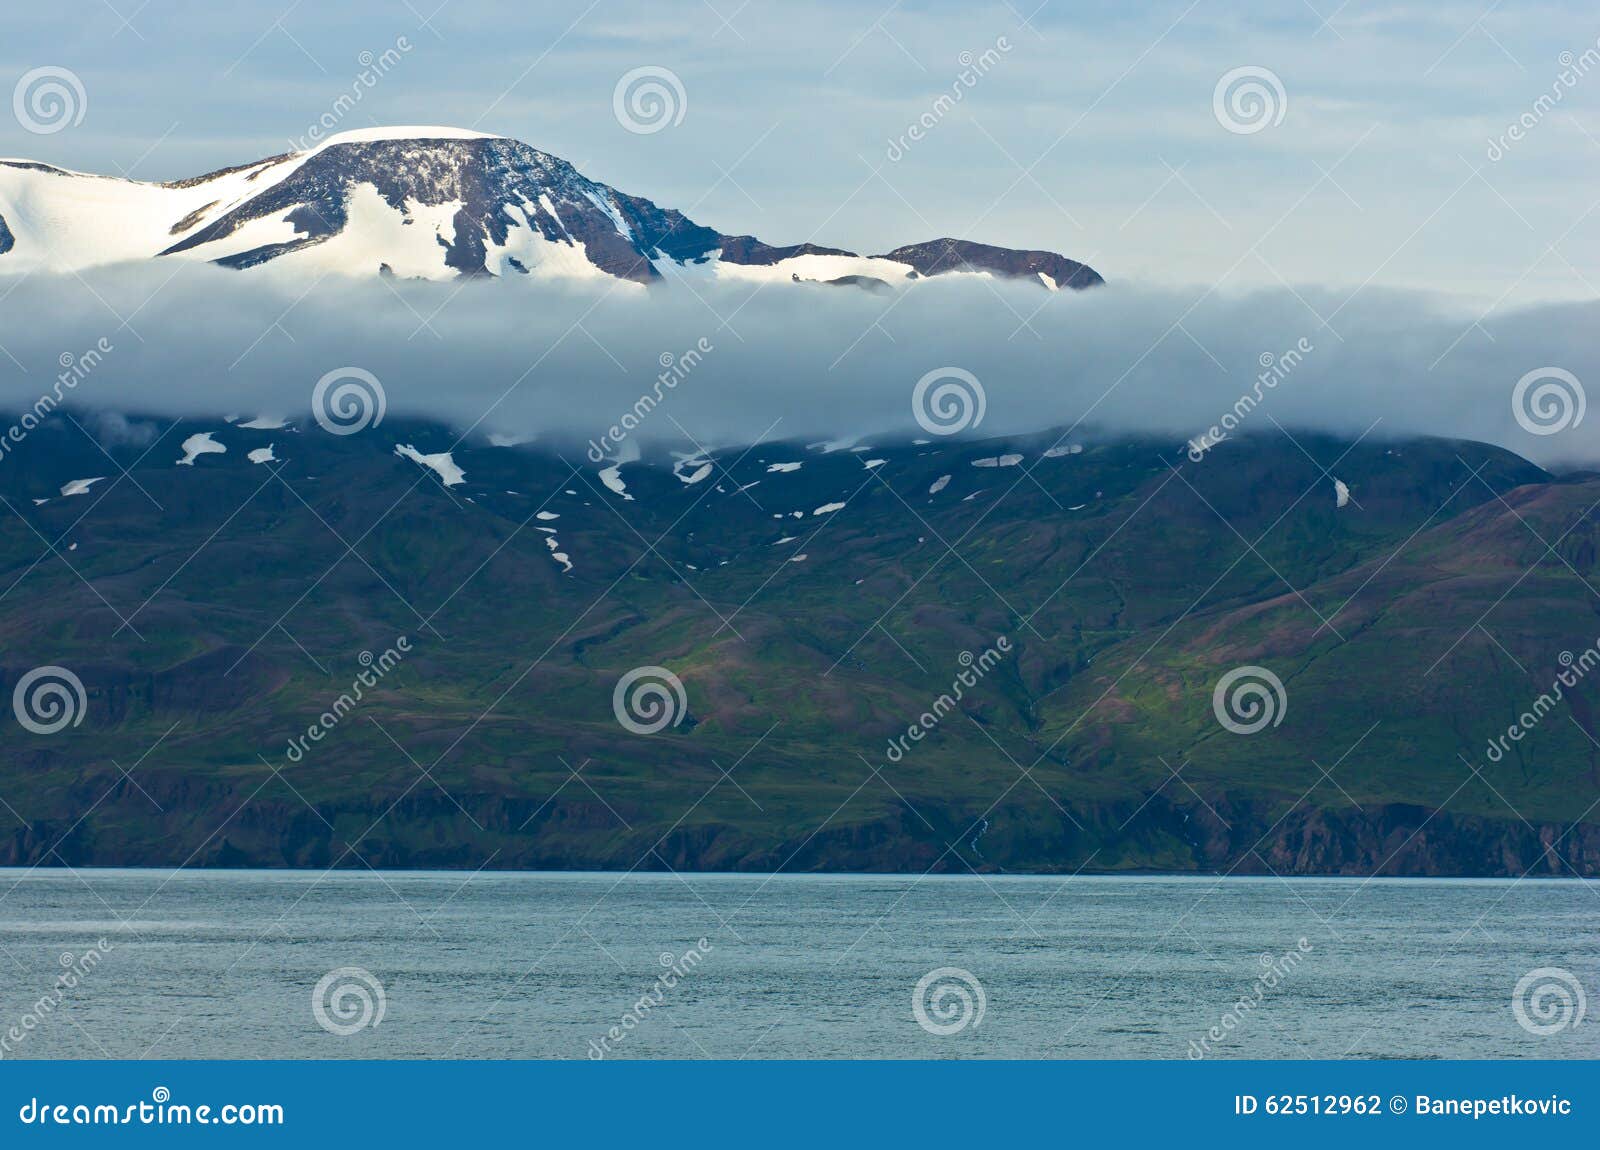 north coast of iceland on the shores of skjalfandi shaky bay